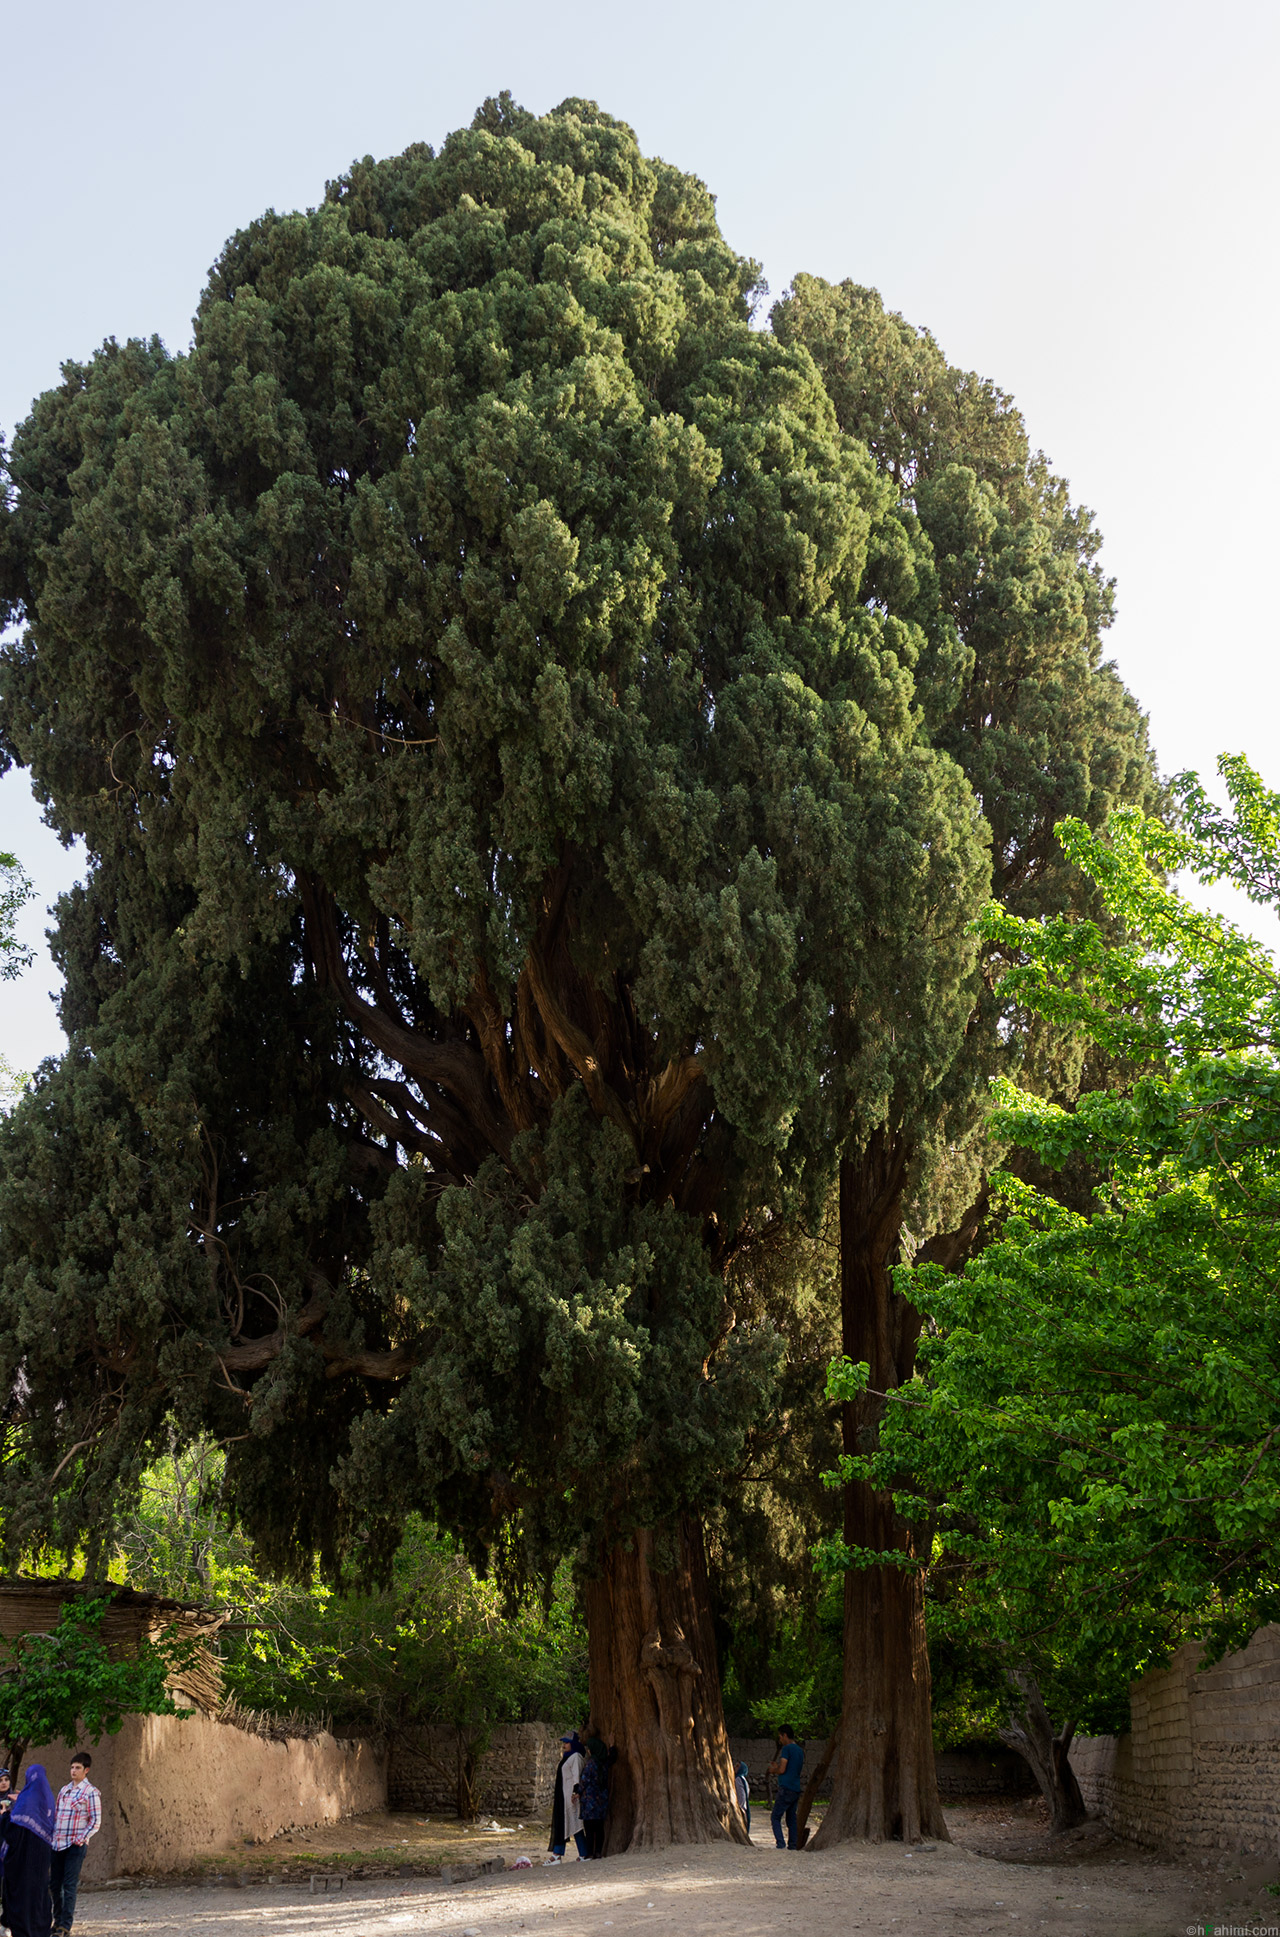 2000 year old Sirch's cypress I